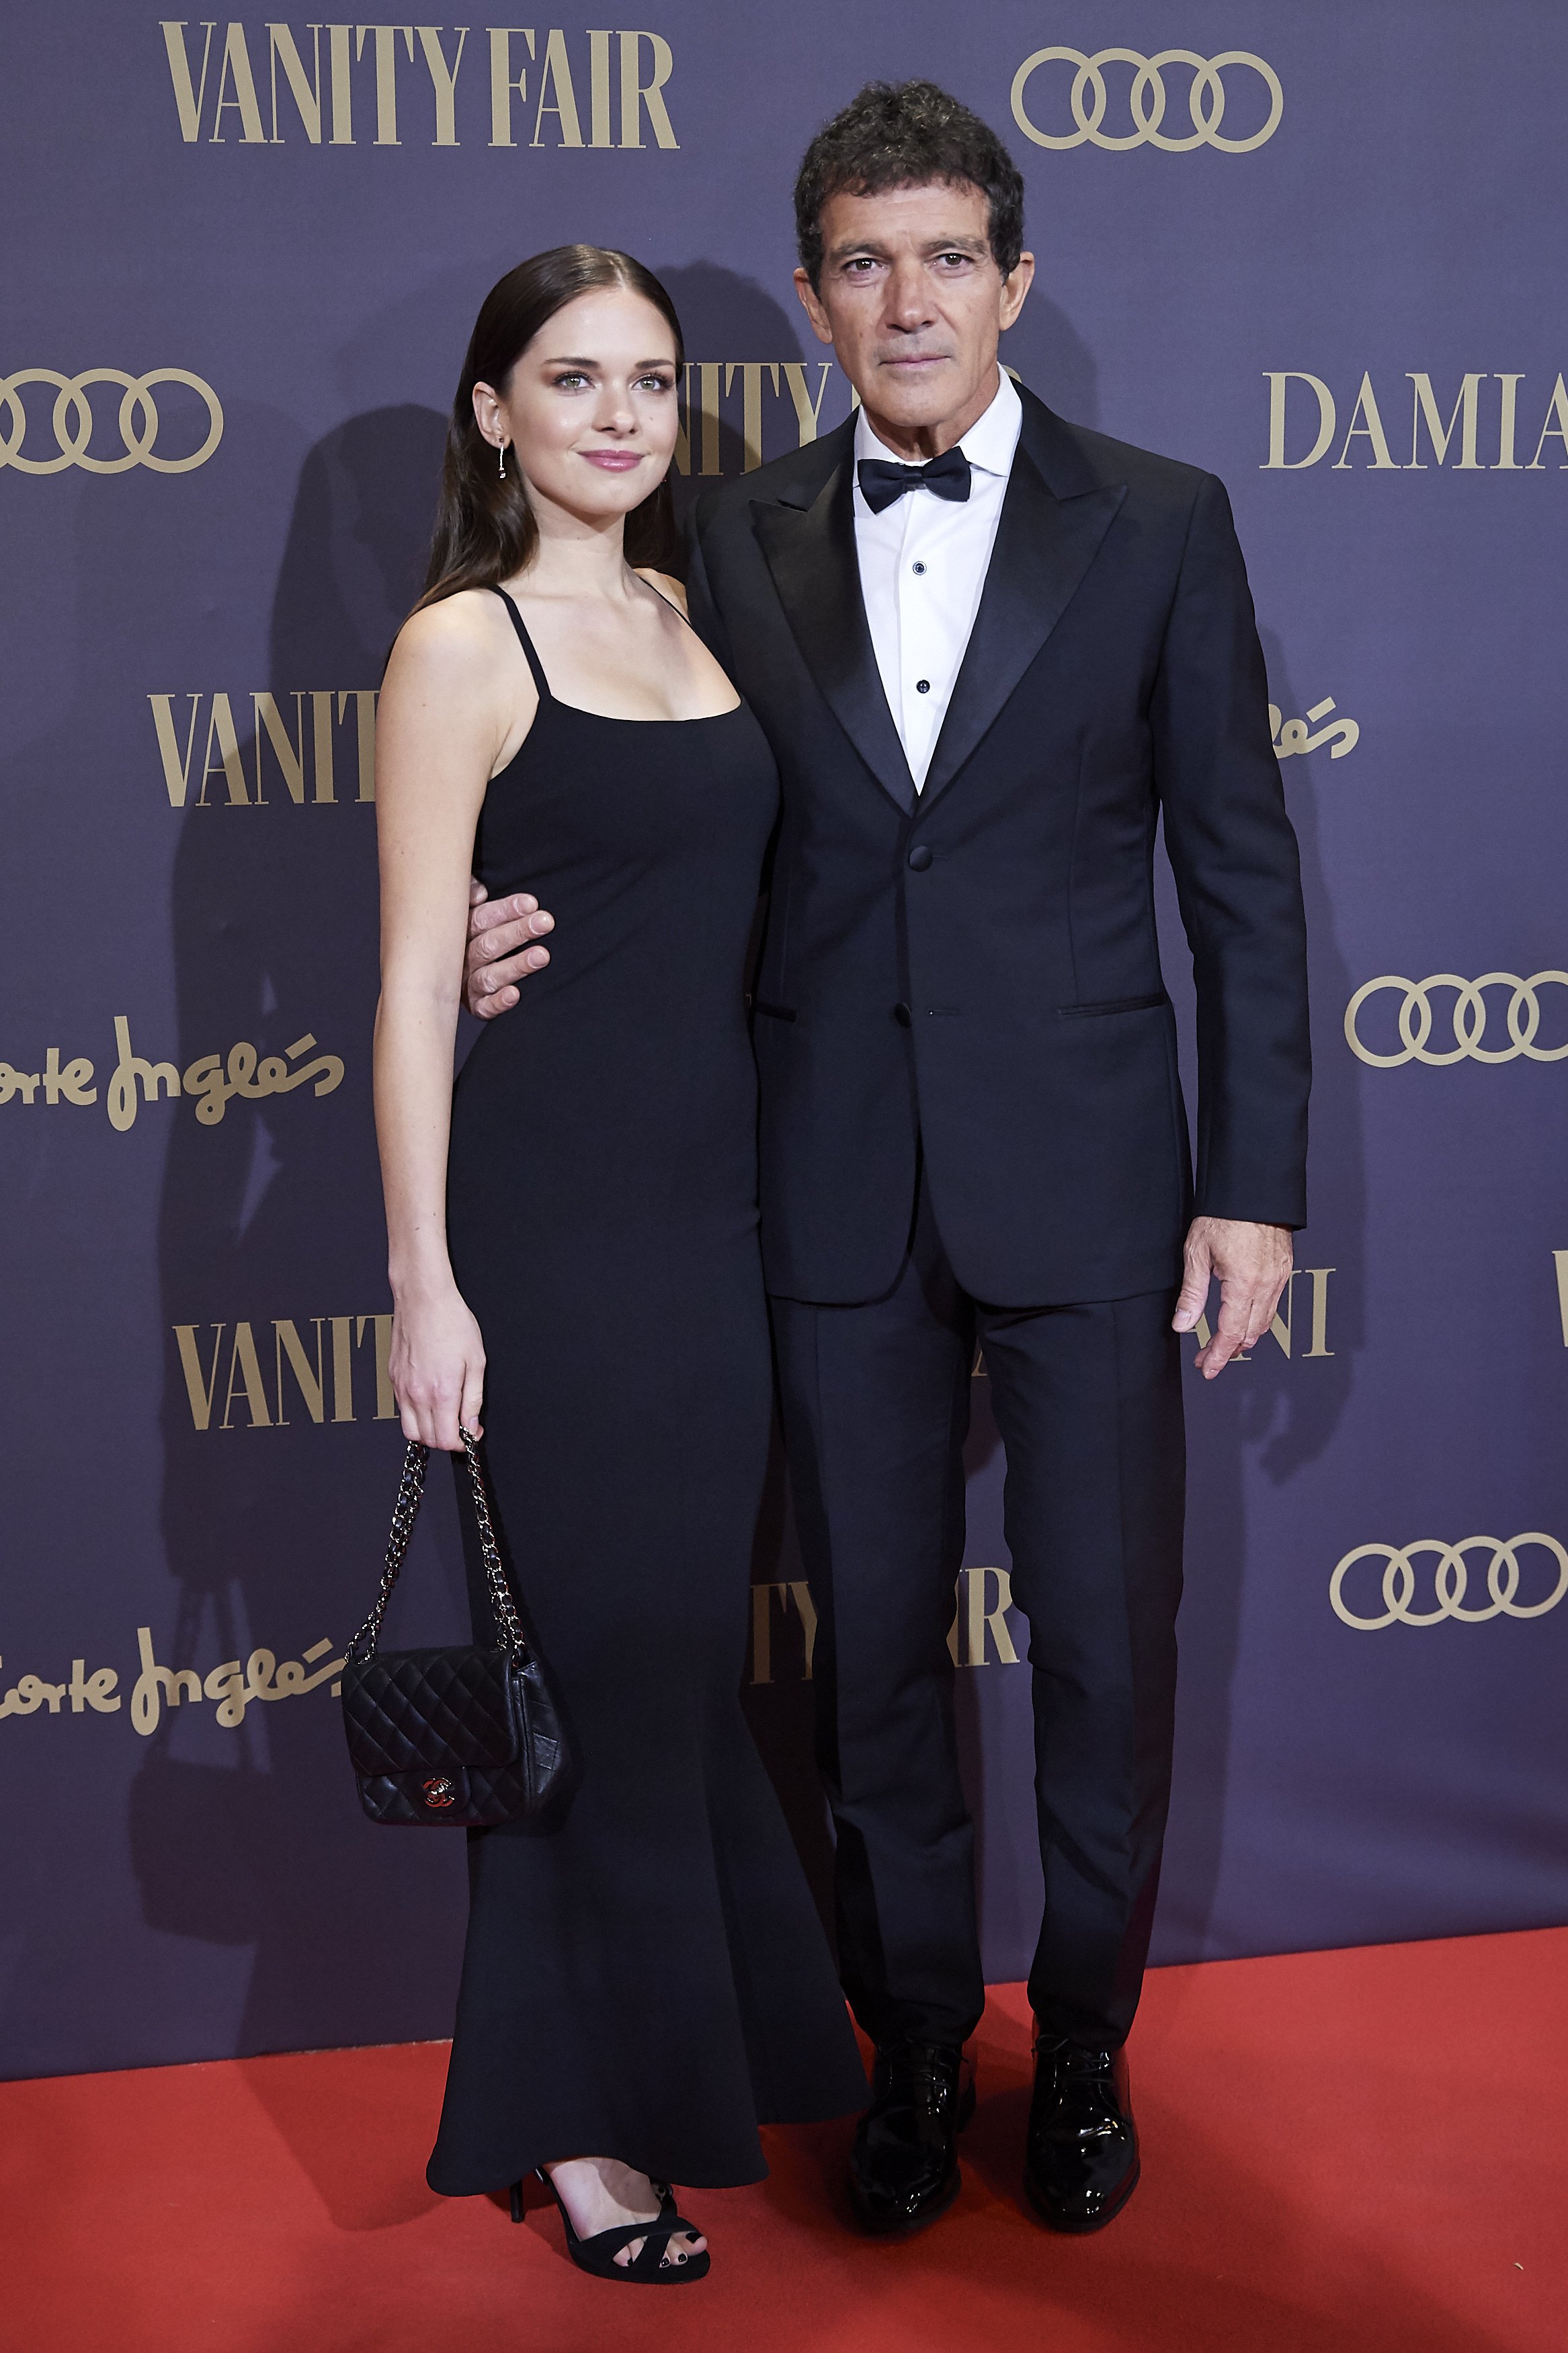 Stella del Carmen Banderas et Antonio Banderas assistent aux Vanity Fair Awards à Madrid | Photo: Getty Images